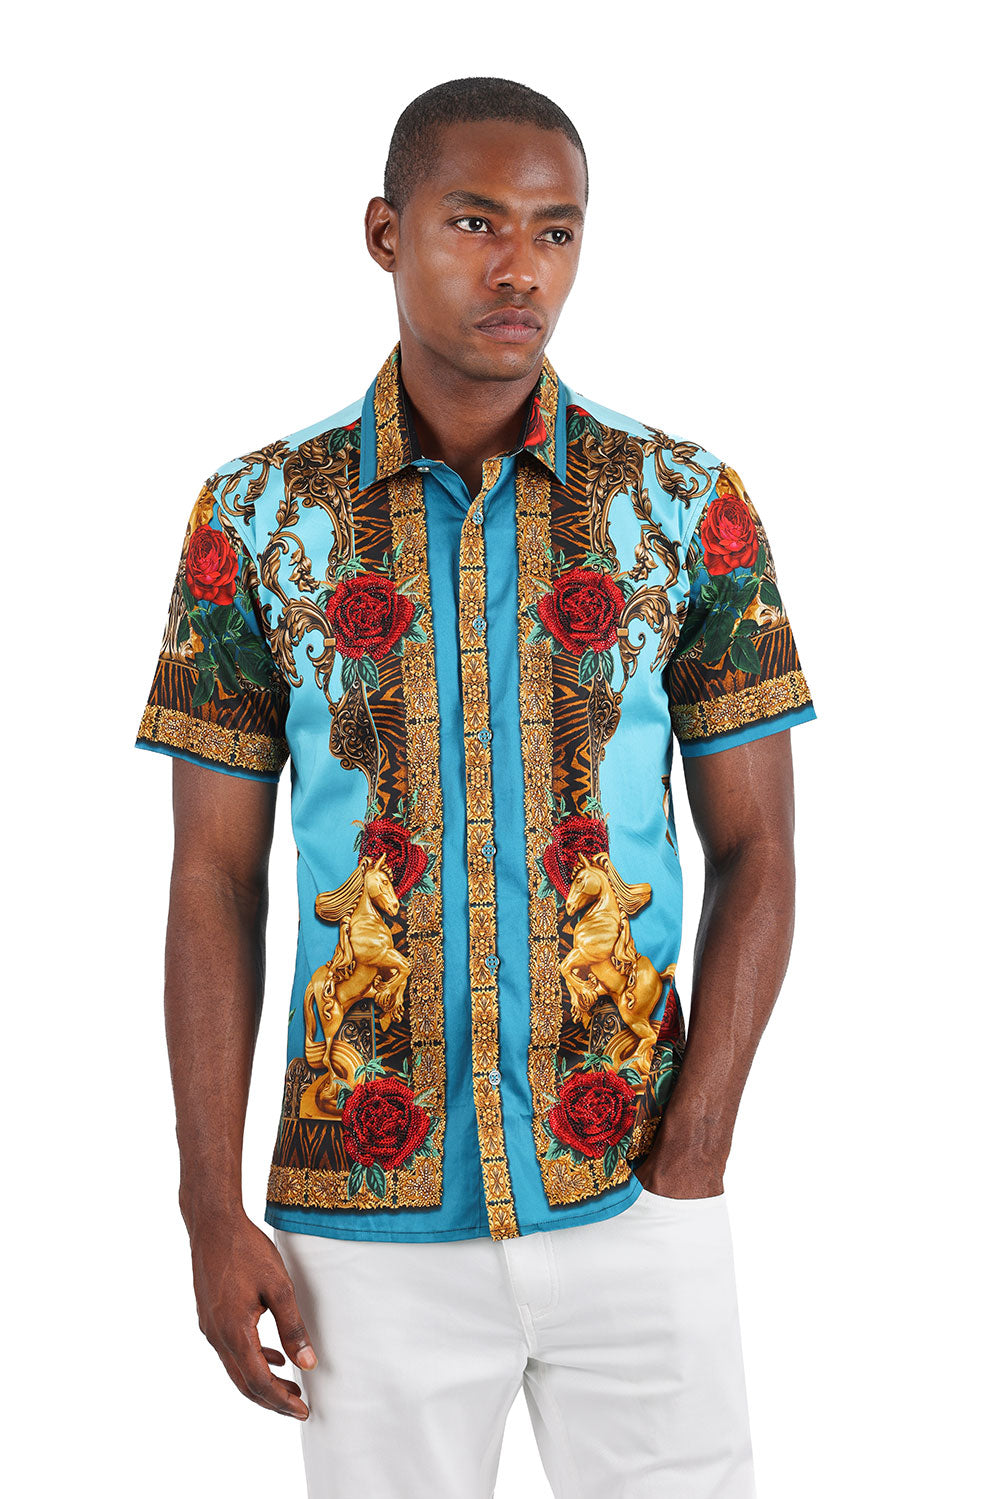 BARABAS Men's Leopard and Rhinestone Floral Short Sleeve Shirts 3SR418 Turquoise